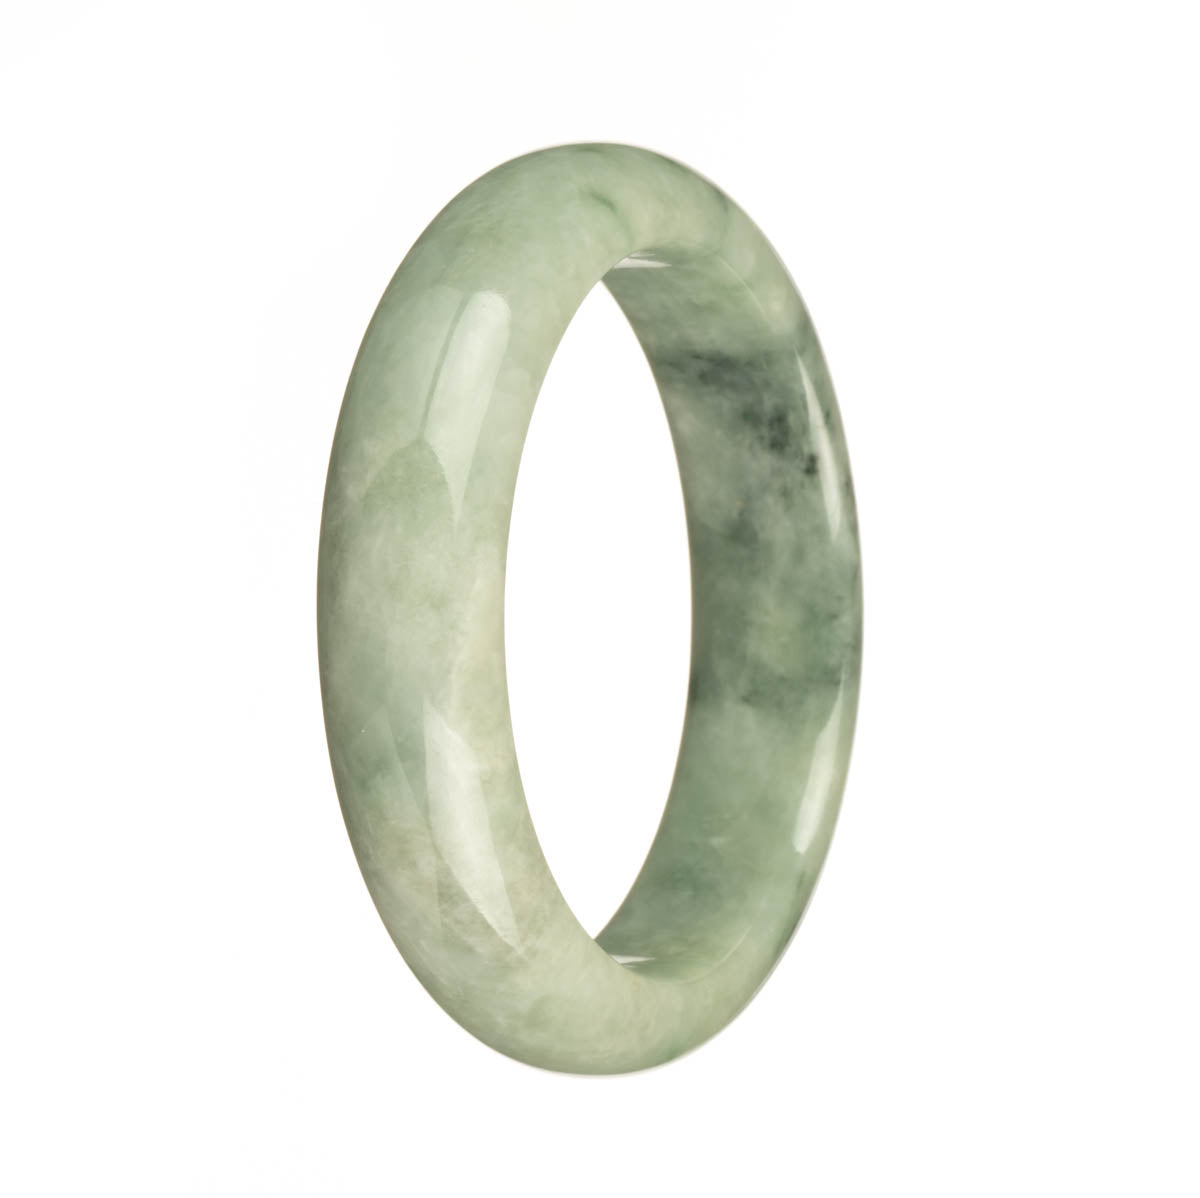 Genuine Grade A Green with Dark Green Patterns and Apple Green Spots Burma Jade Bracelet - 57mm Half Moon